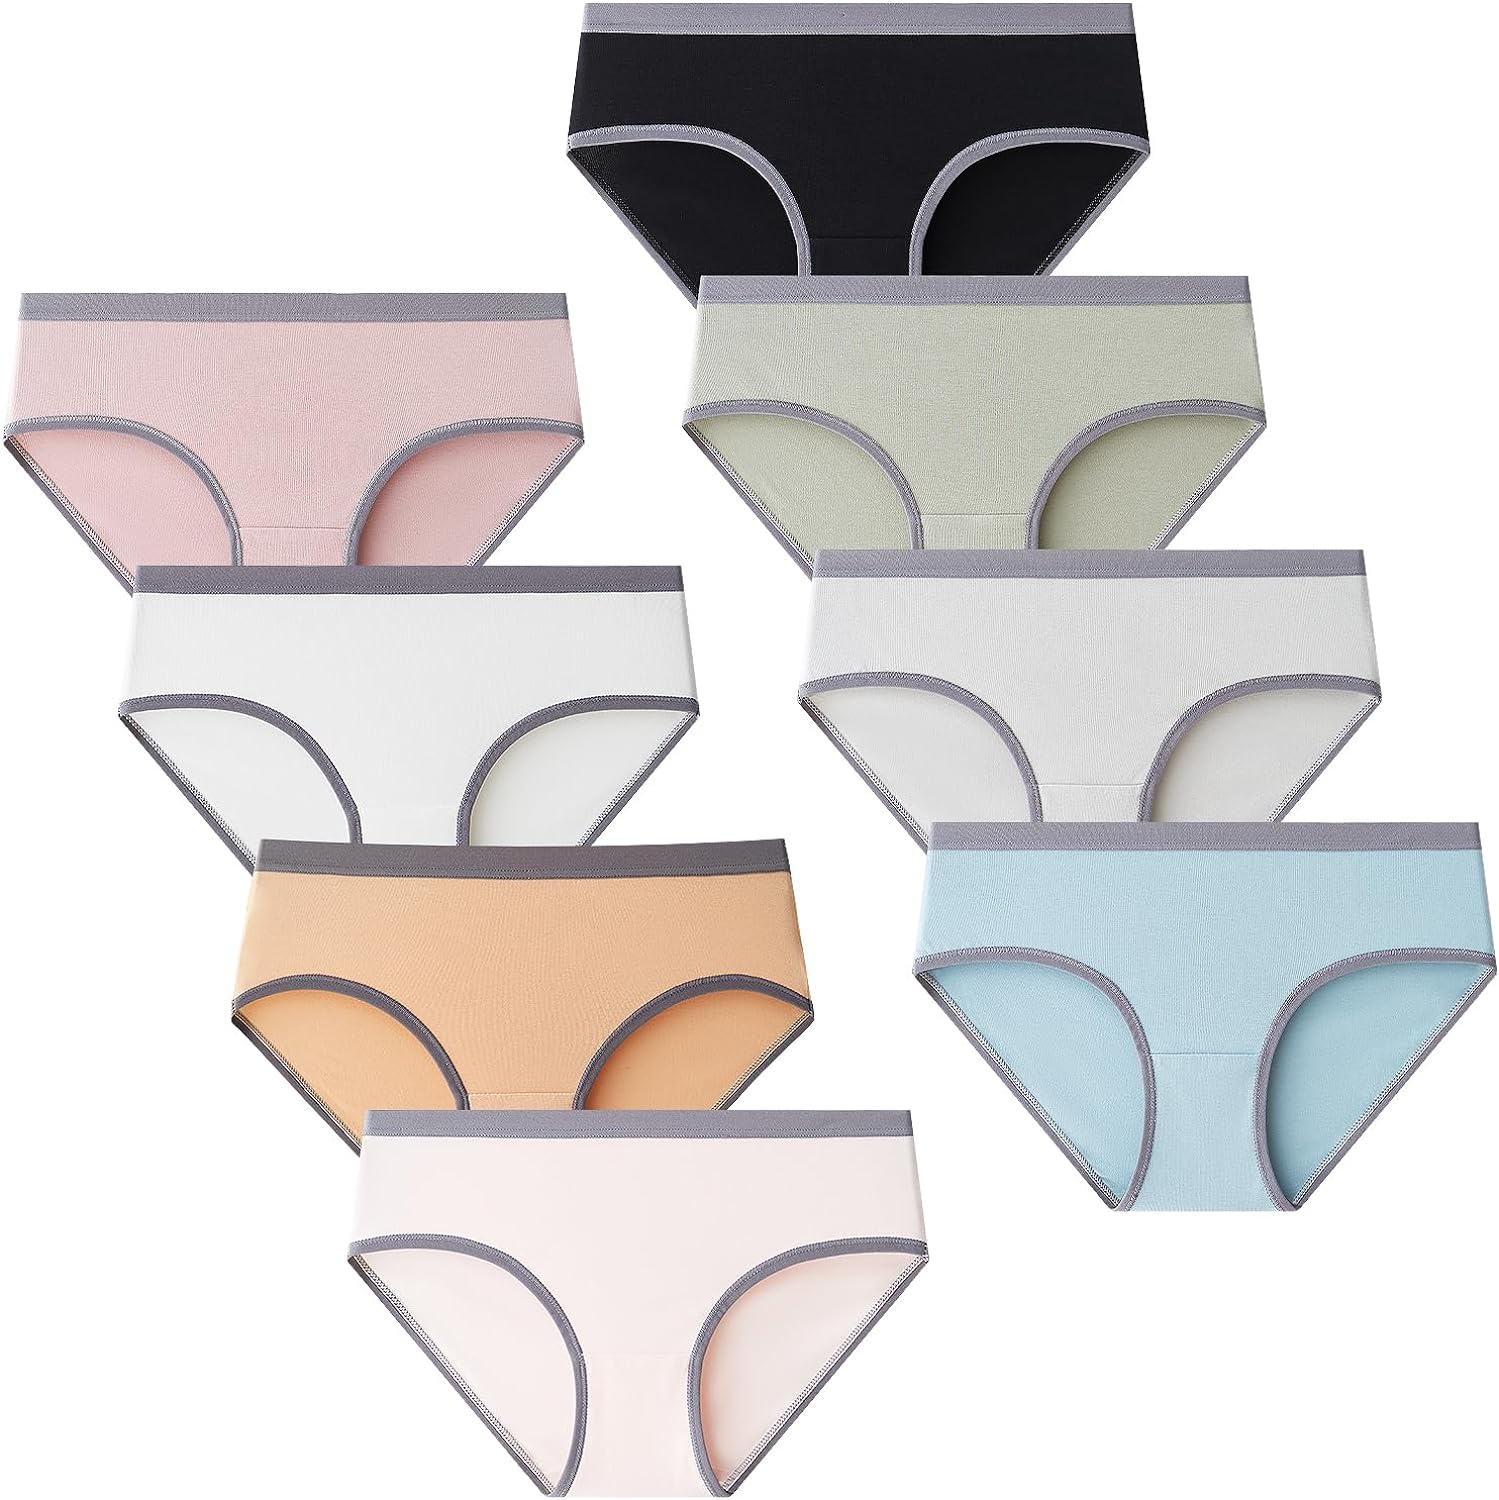 Domee Teen Girls Cotton Underwear Panties Briefs Pack of 8 Underpants